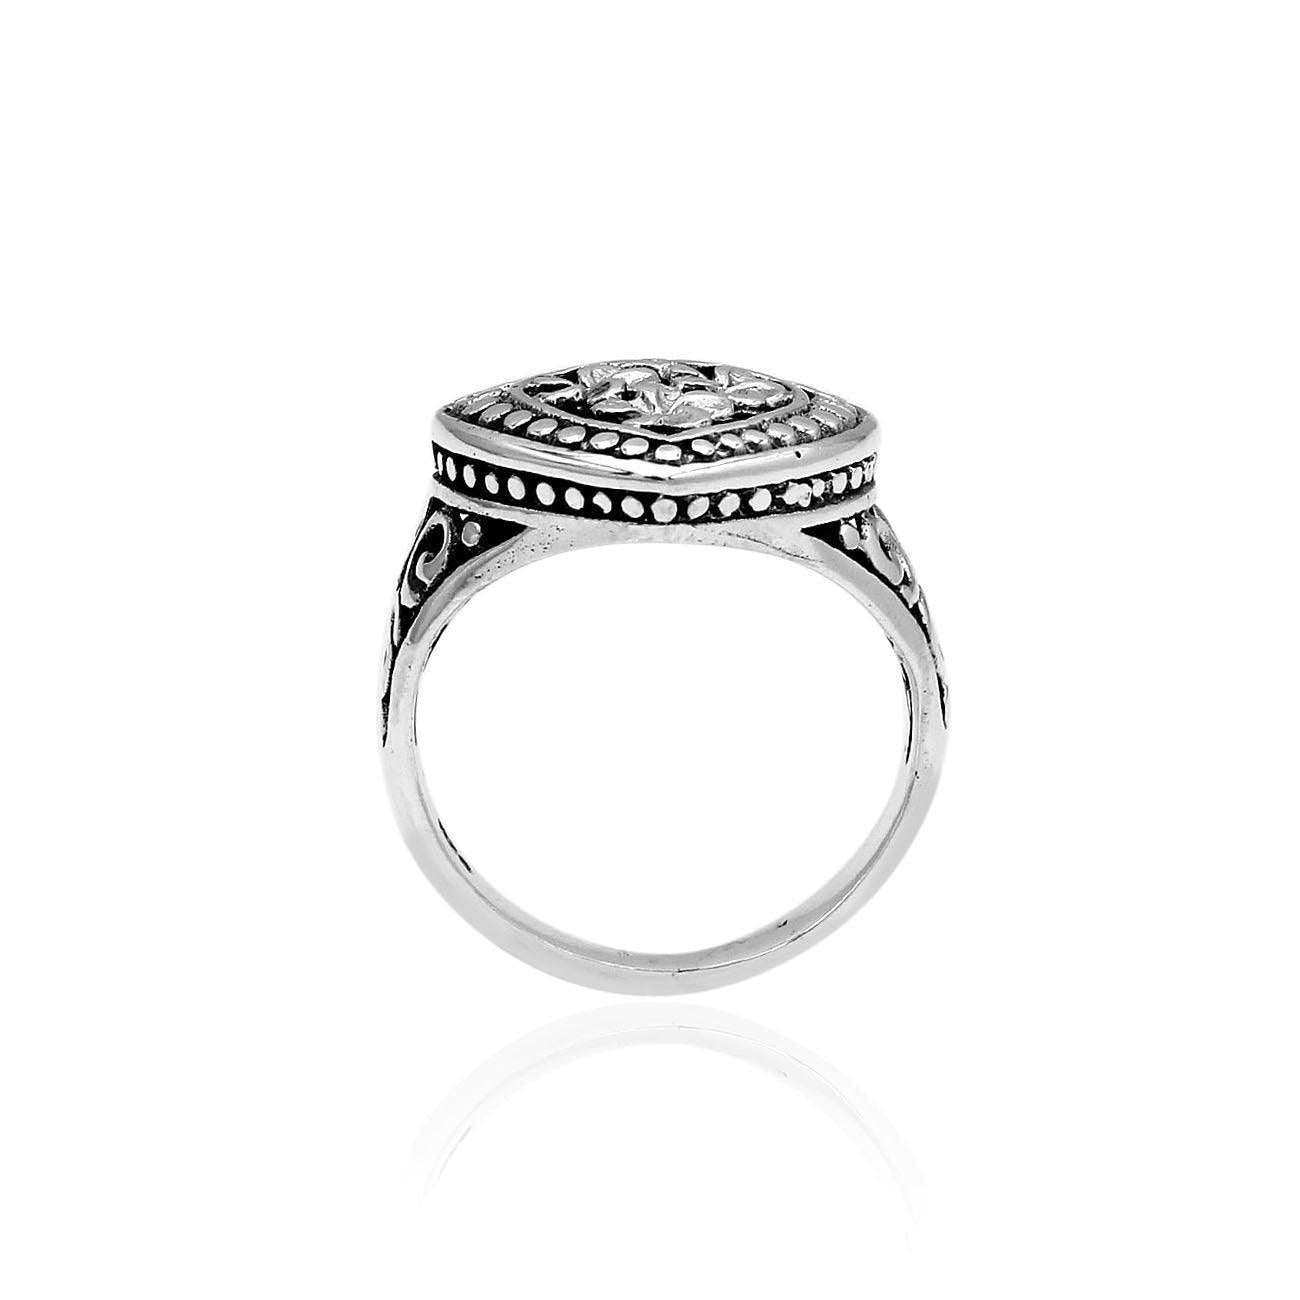 Designer Handmade BALI HEART Ring in 925 Sterling Silver - Size L , M , N , O , P , Q - Inspiring Jewellery